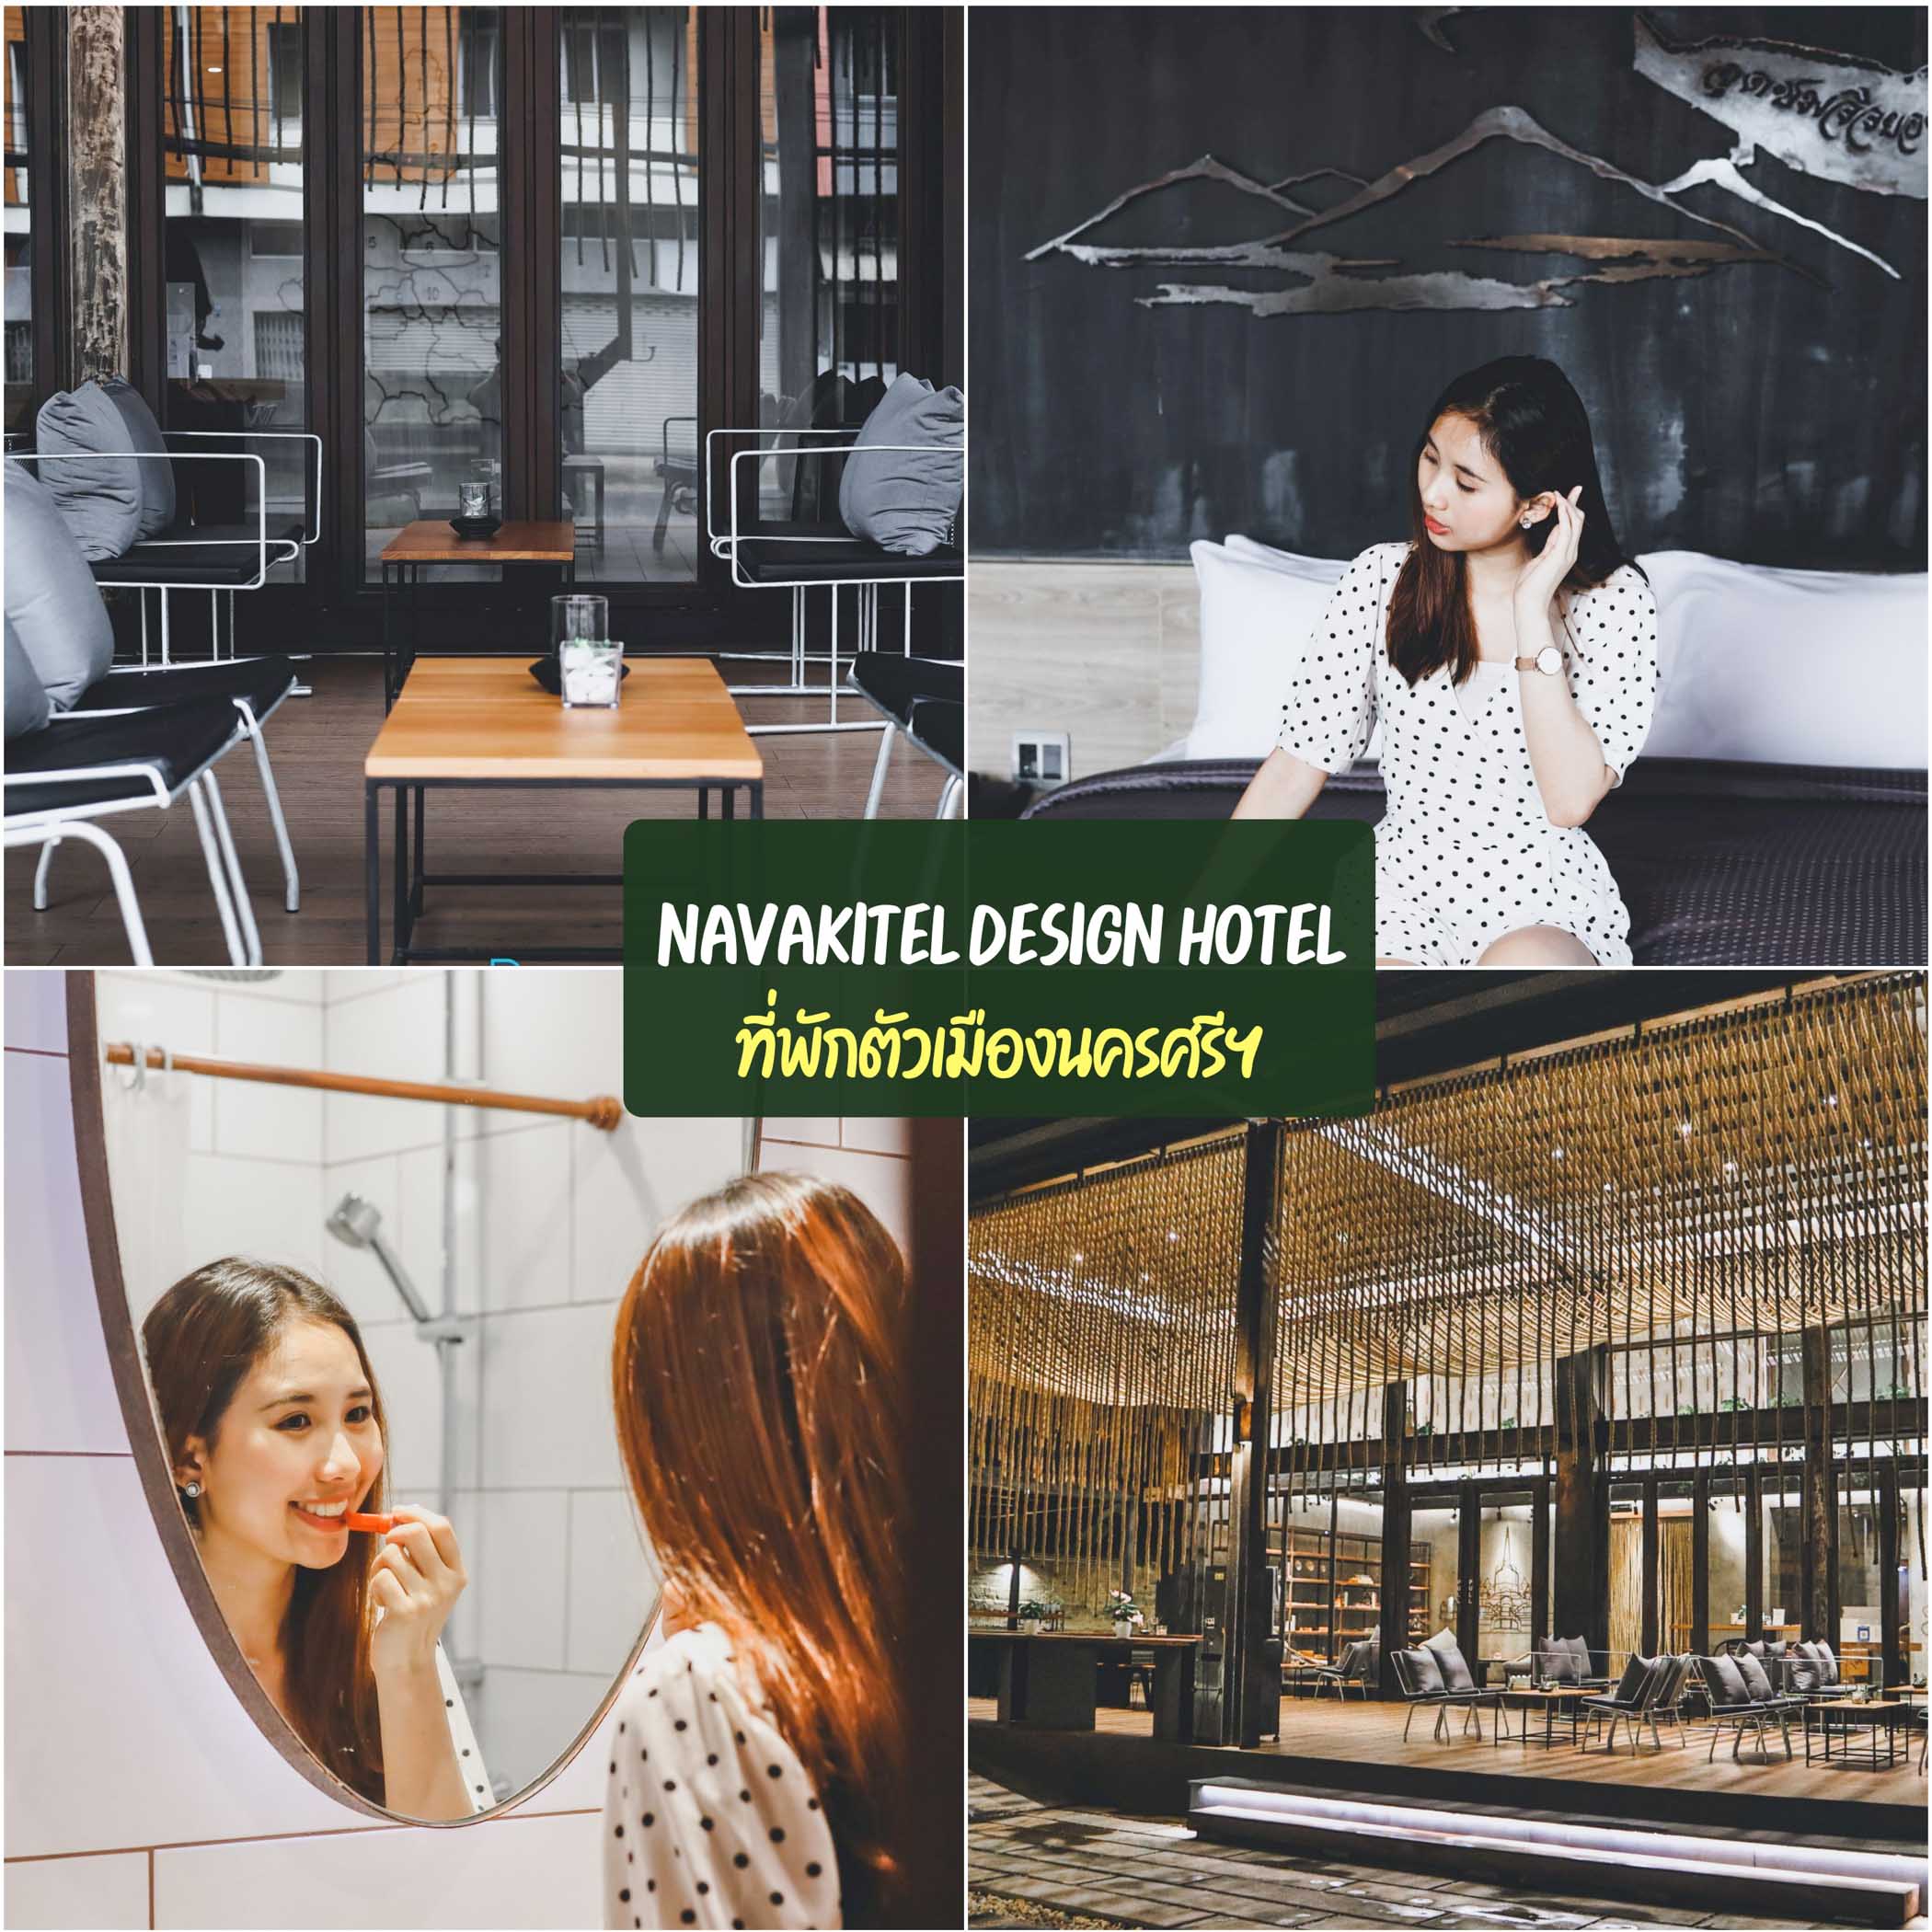 Navakitel-Design-Hotel ที่พักสุดสวยตัวเมืองนครศรีฯ-ดีไซน์ไม่เหมือนใคร ที่พัก,นครศรีธรรมราช,วัดเจดีย์,ตาไข่,โรมแรม,รีสอร์ท,ธรรมชาติ,กลางเมือง,ห้องพัก,วิวหลักล้าน,คาเฟ่